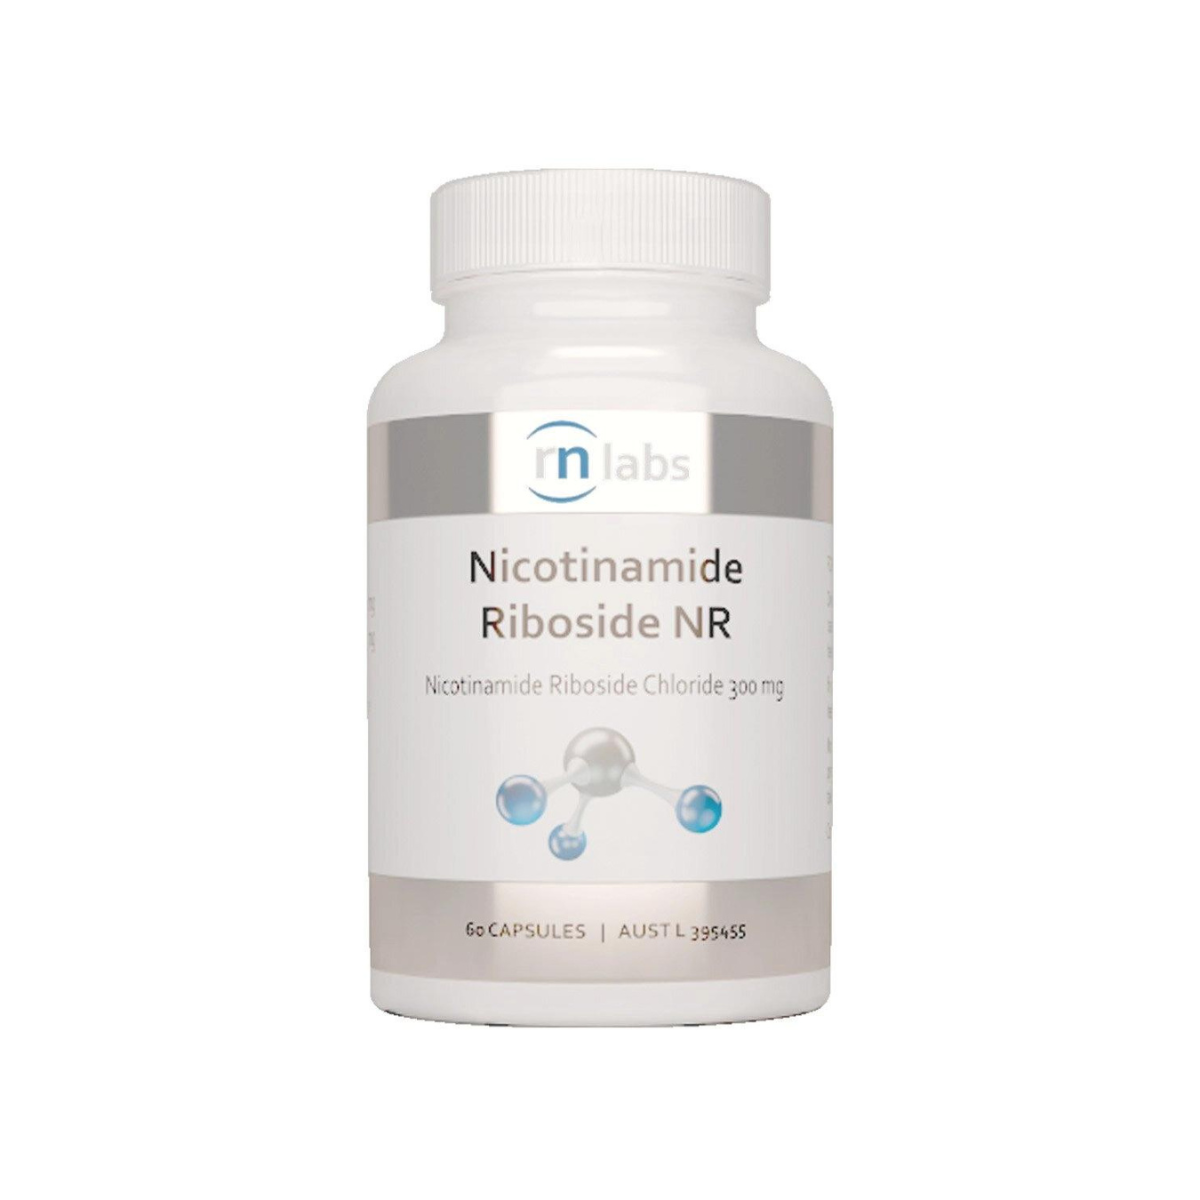 RN Labs Nicotinamide Riboside NR 60 Capsules